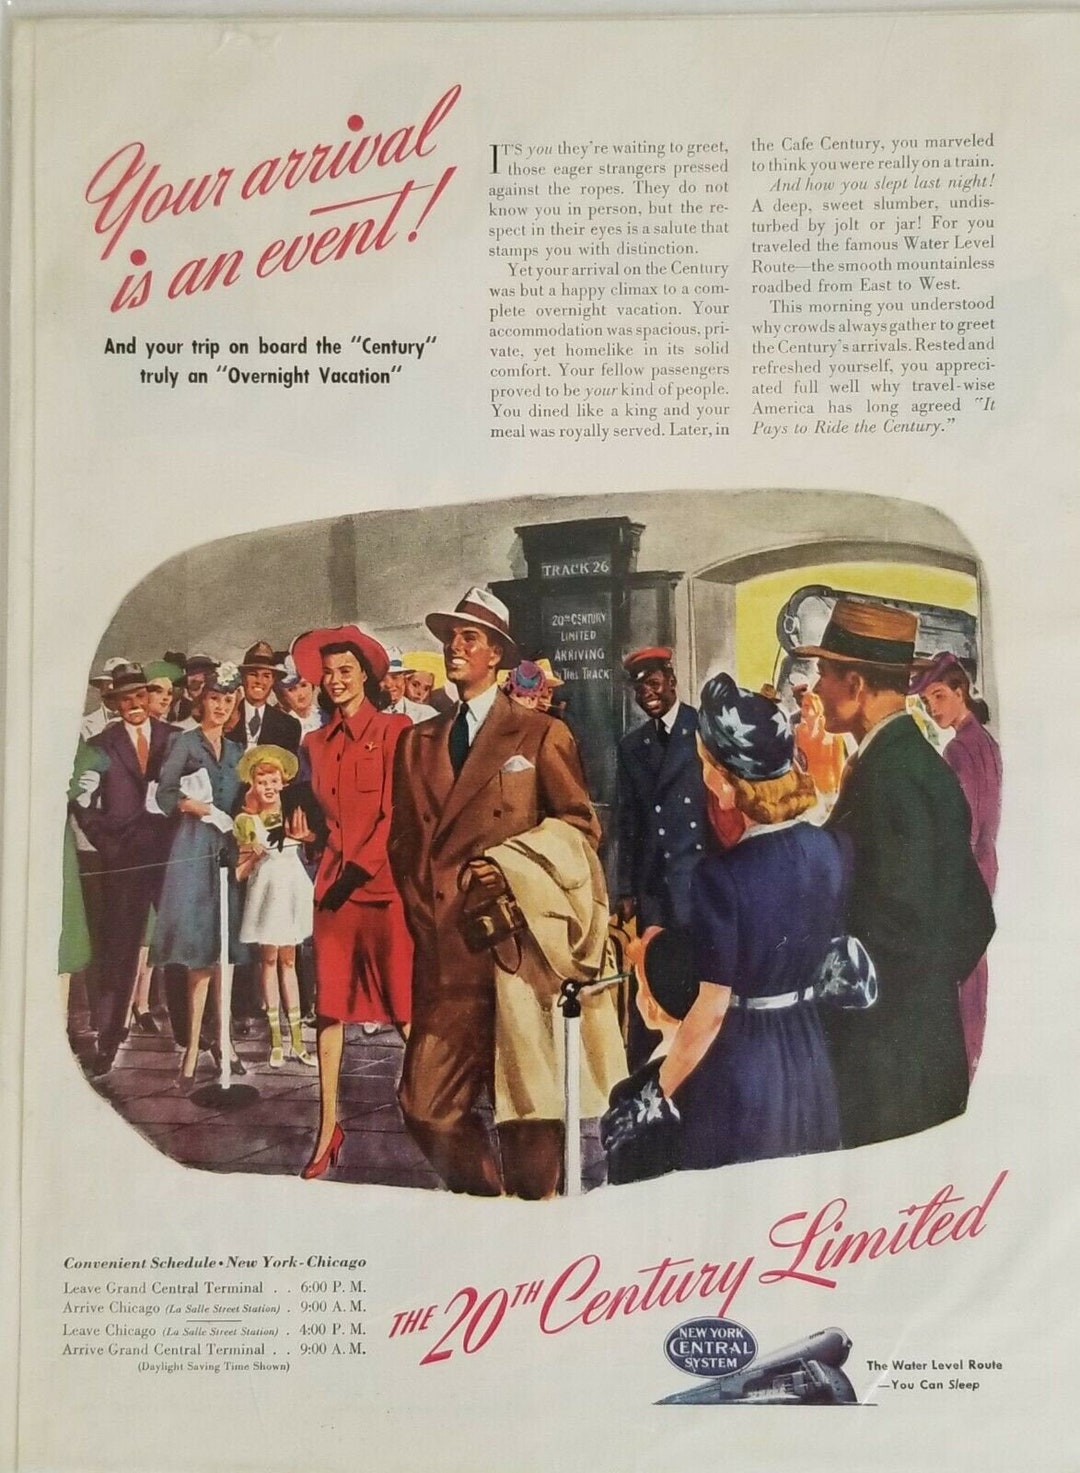  1957 Vintage Lingerie Ad for Maidenform Bra - I